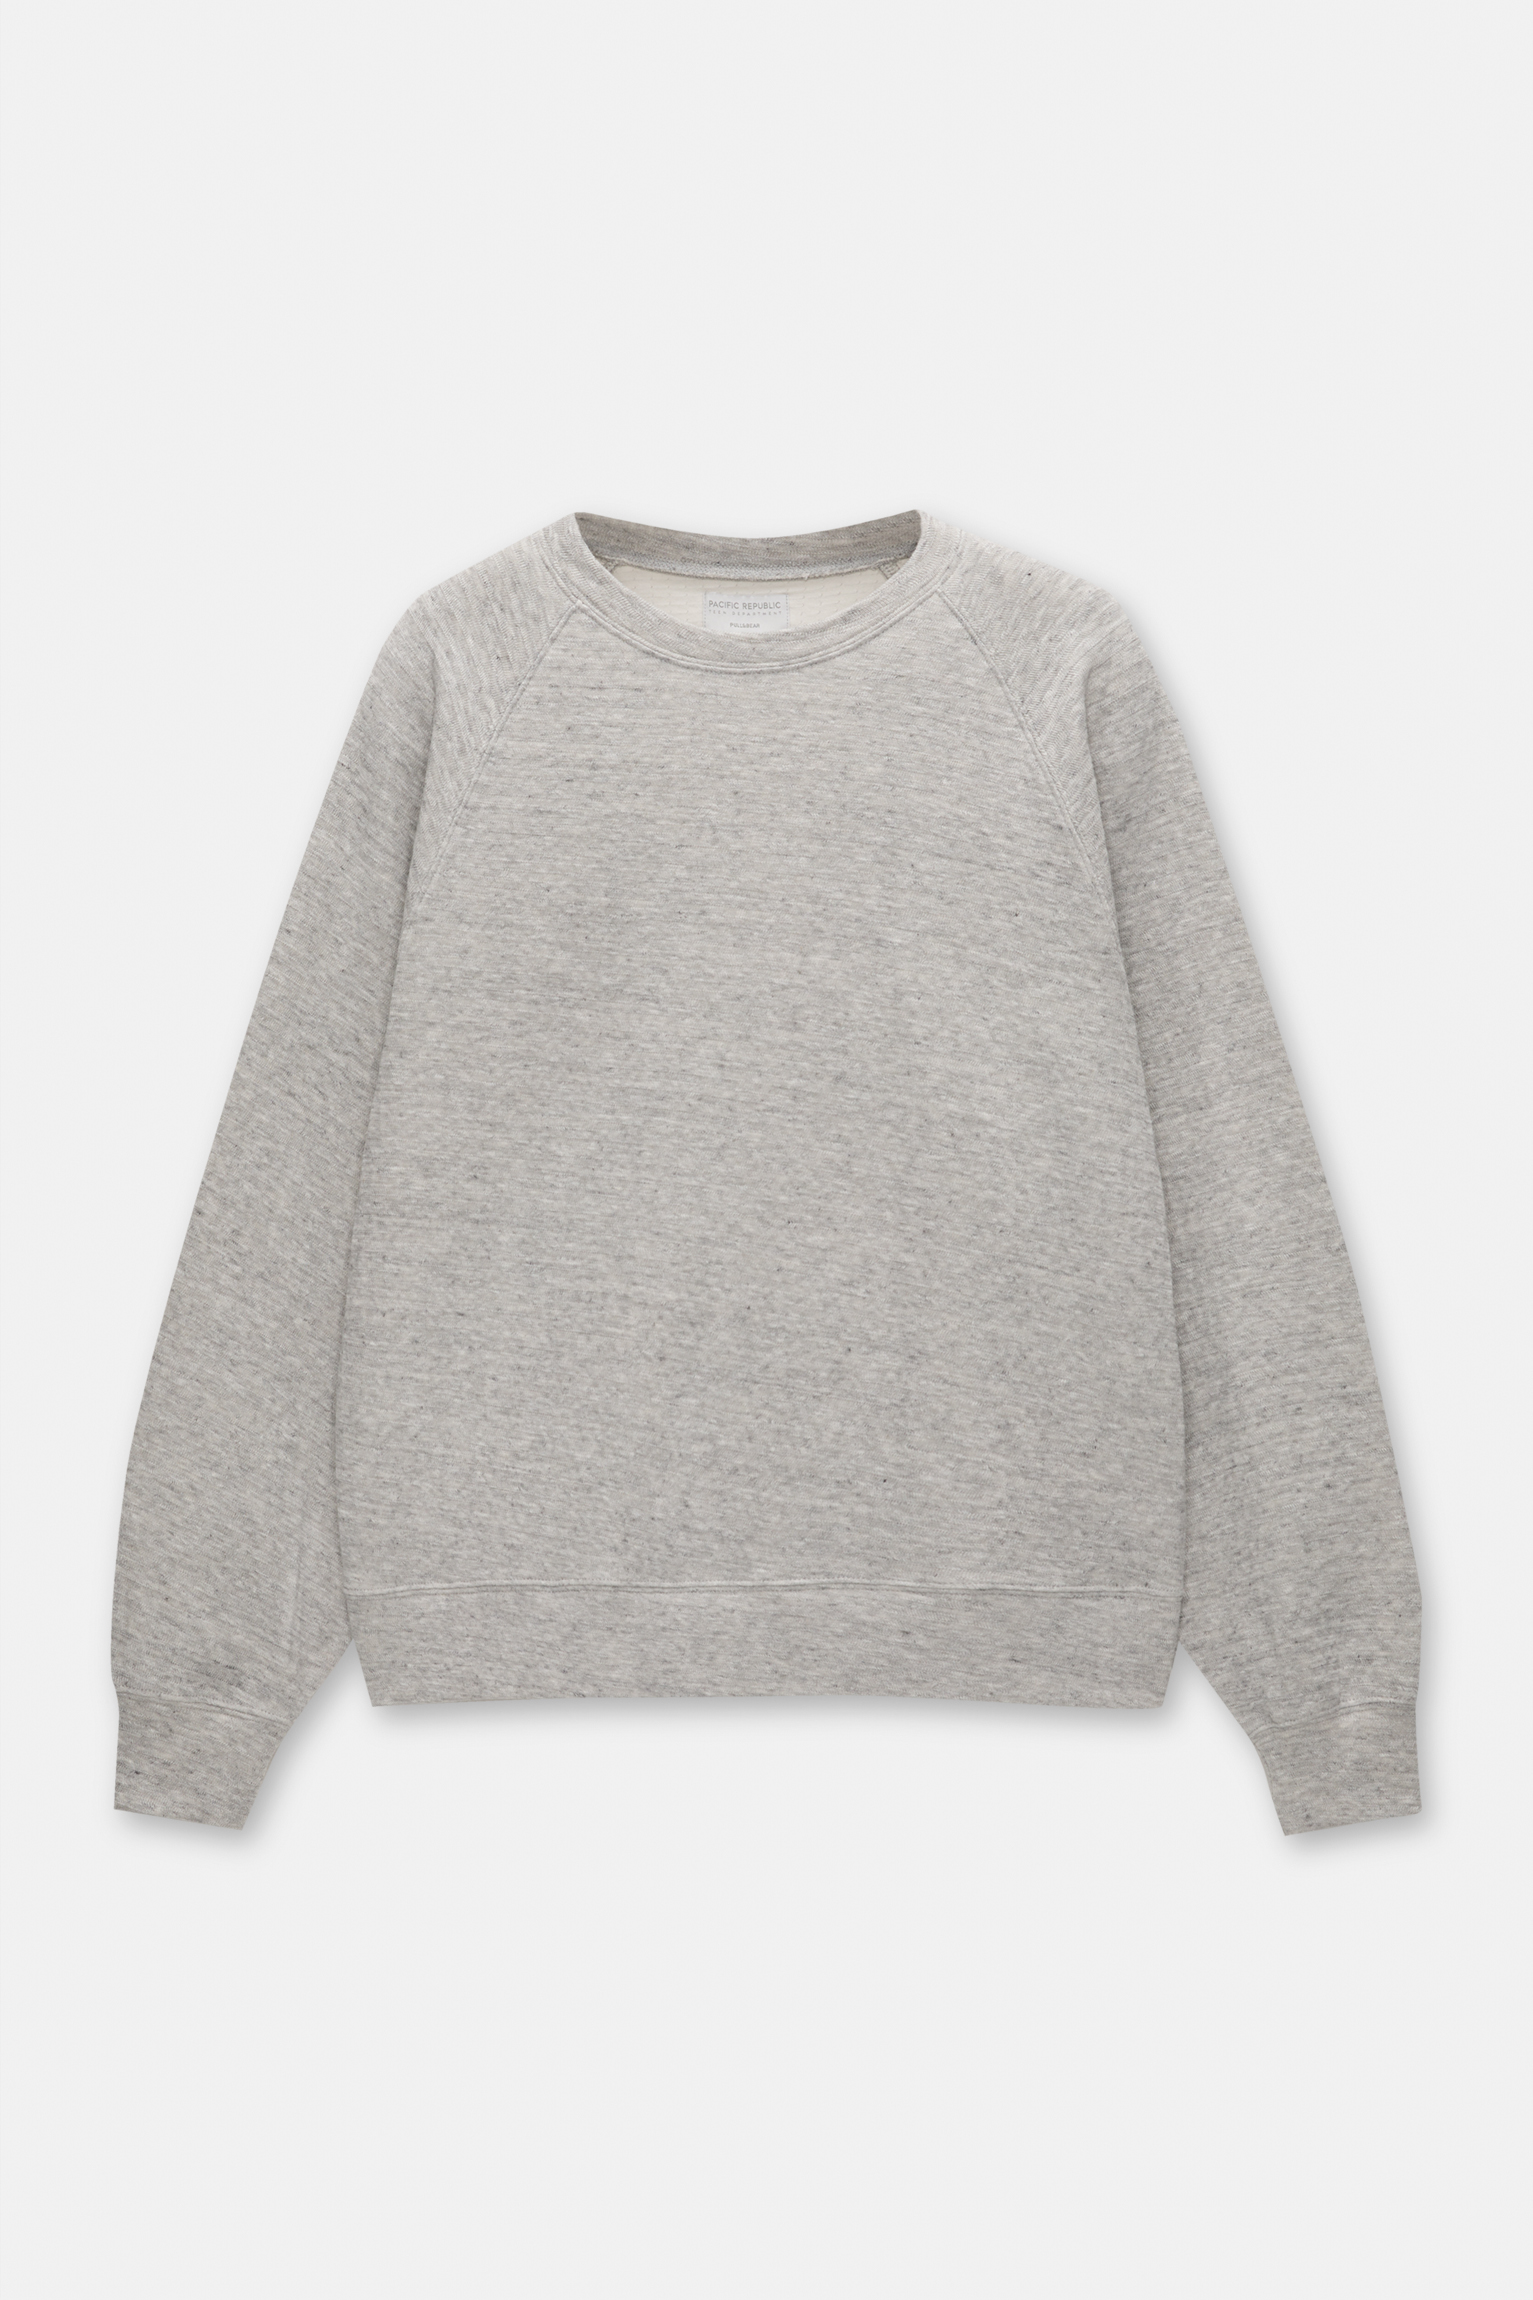 Grey textured sweatshirt